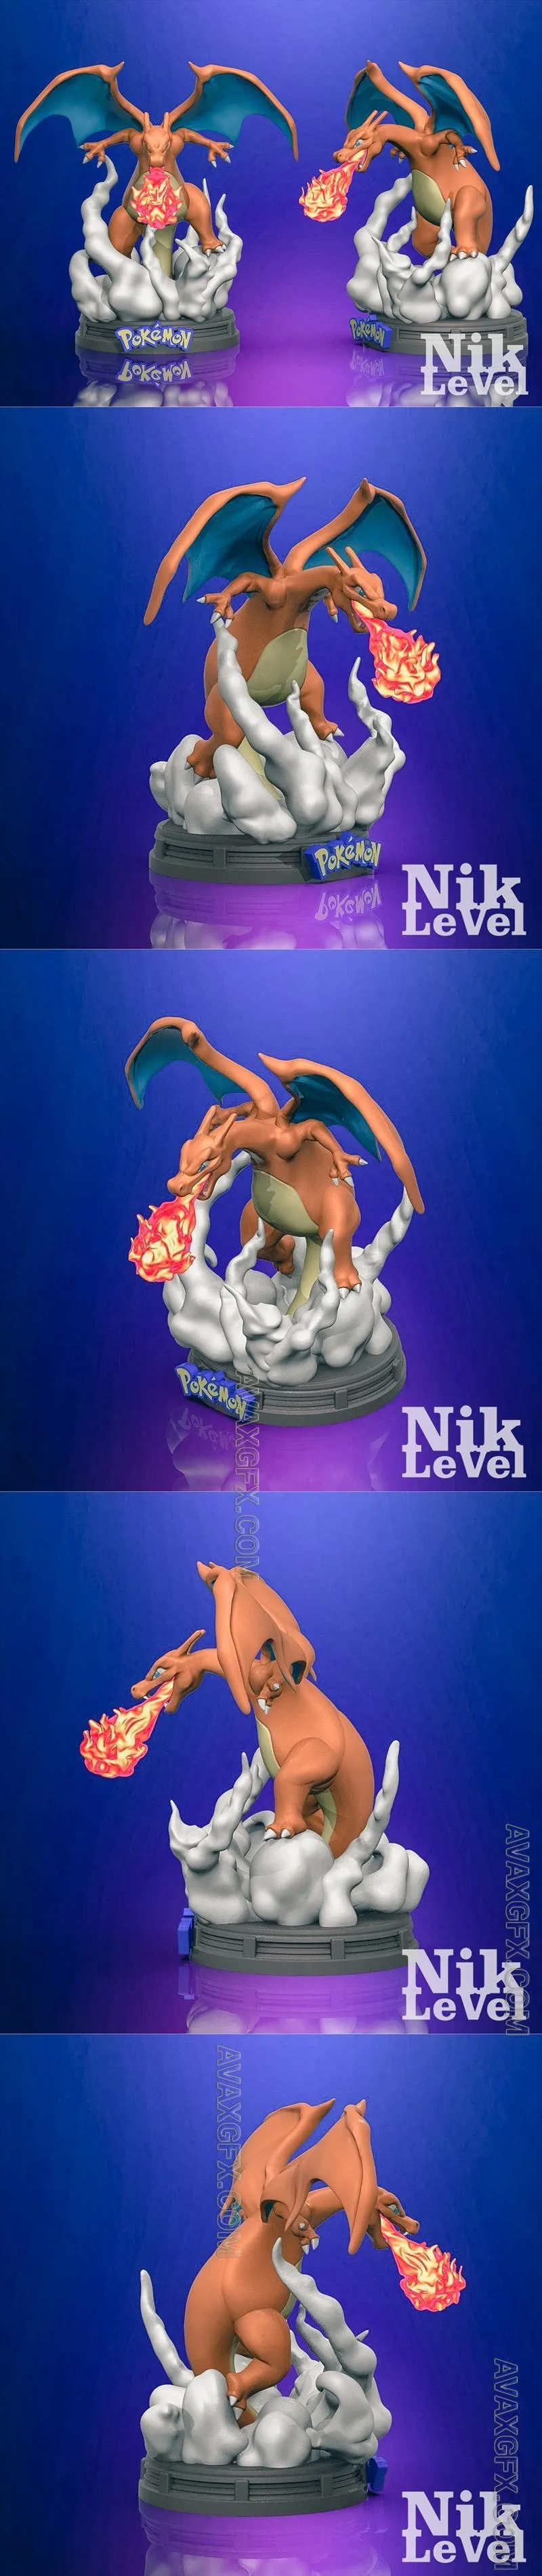 Nik-Level - Charizard Pokemon - STL 3D Model